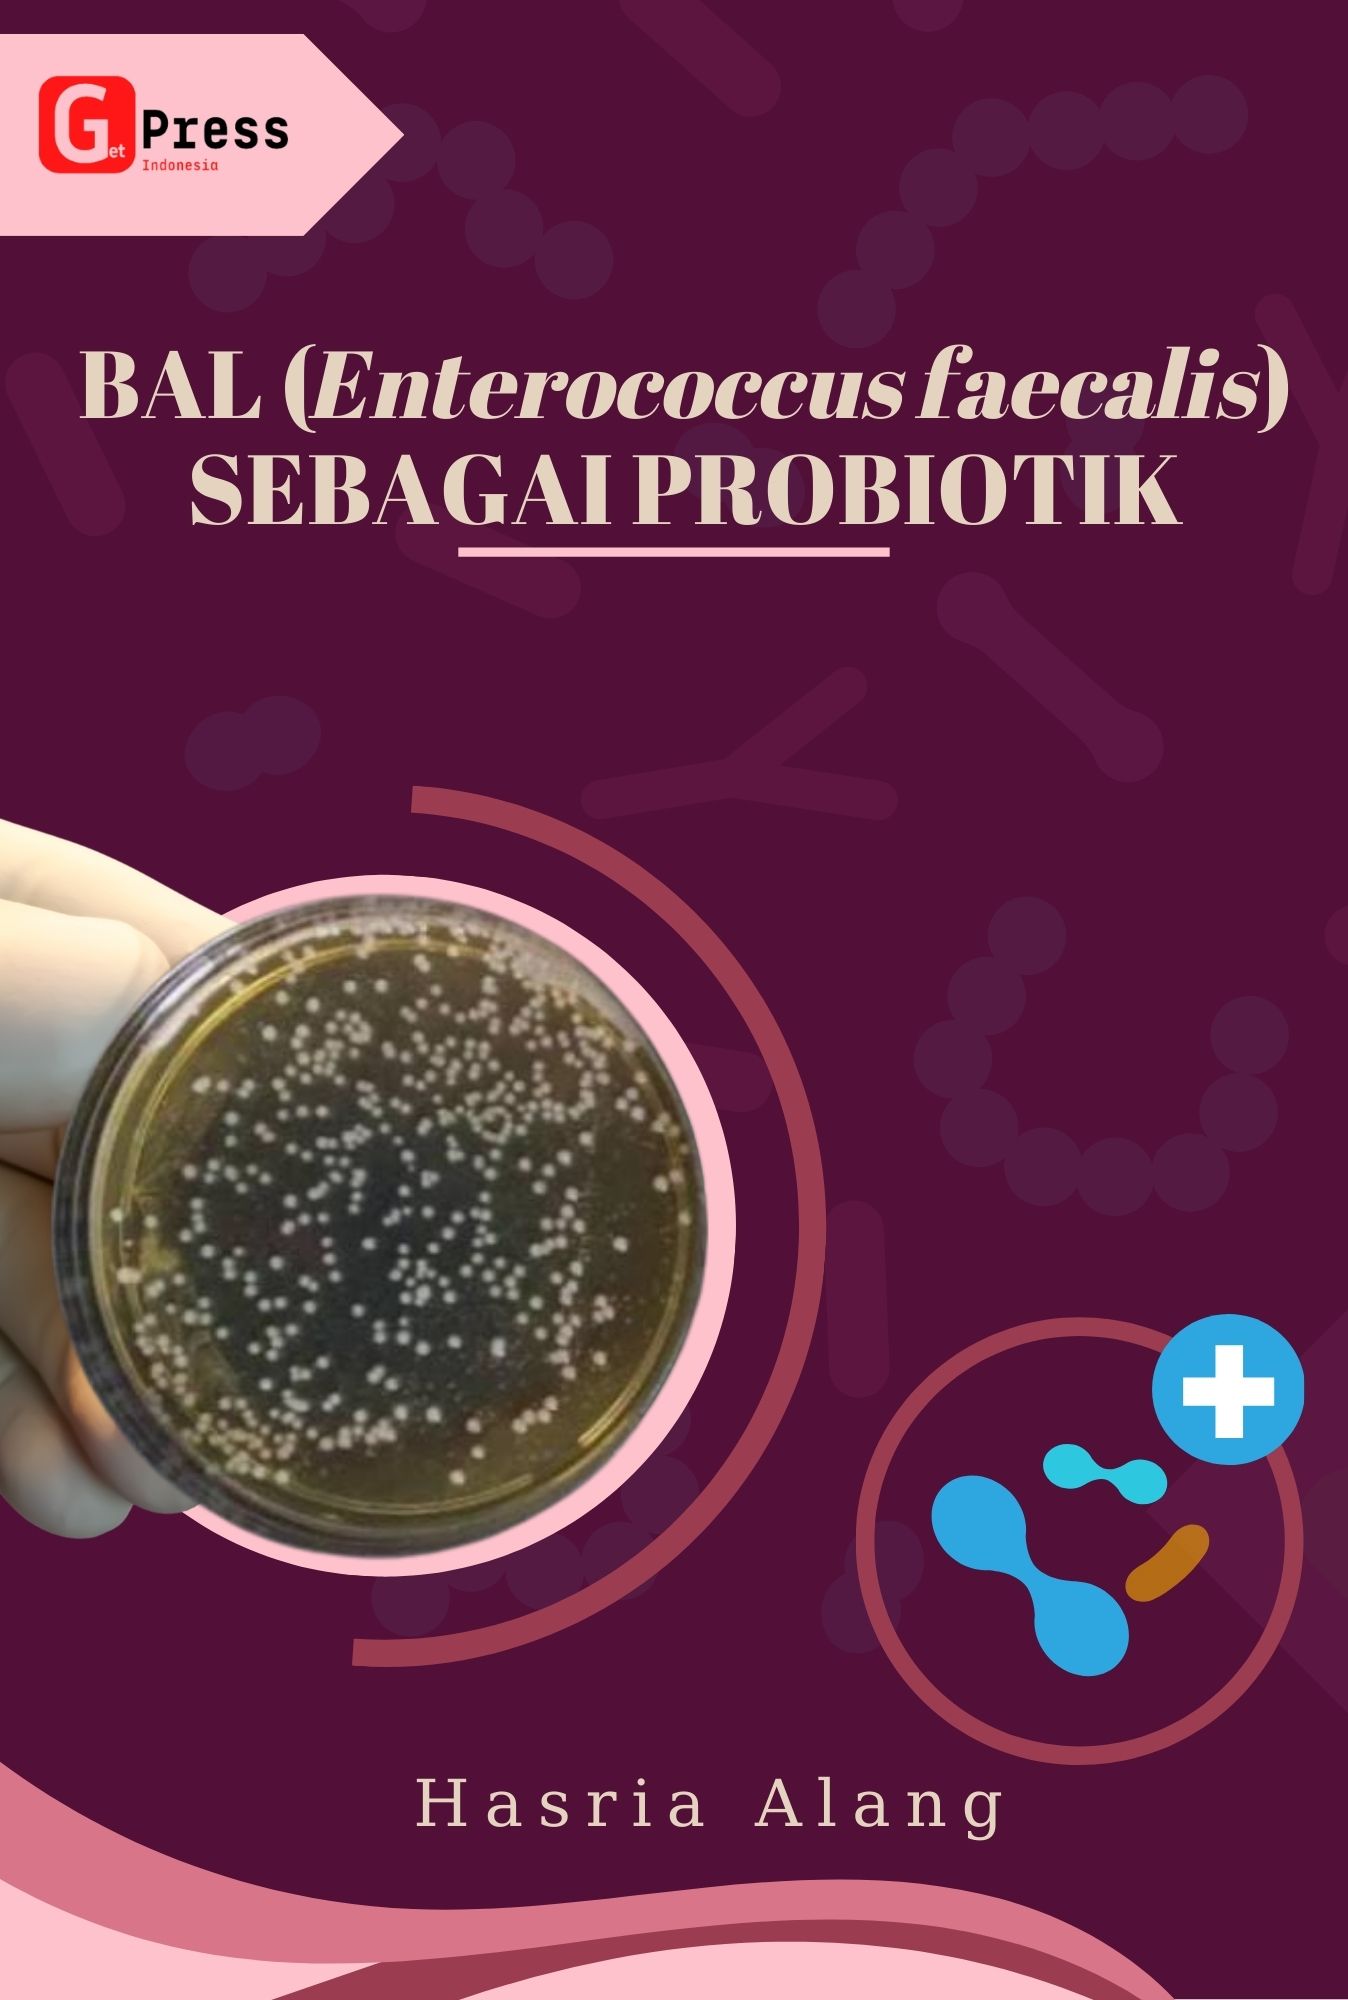 MONOGRAF  BAL (Enterococcus faecalis) SEBAGAI PROBIOTIK